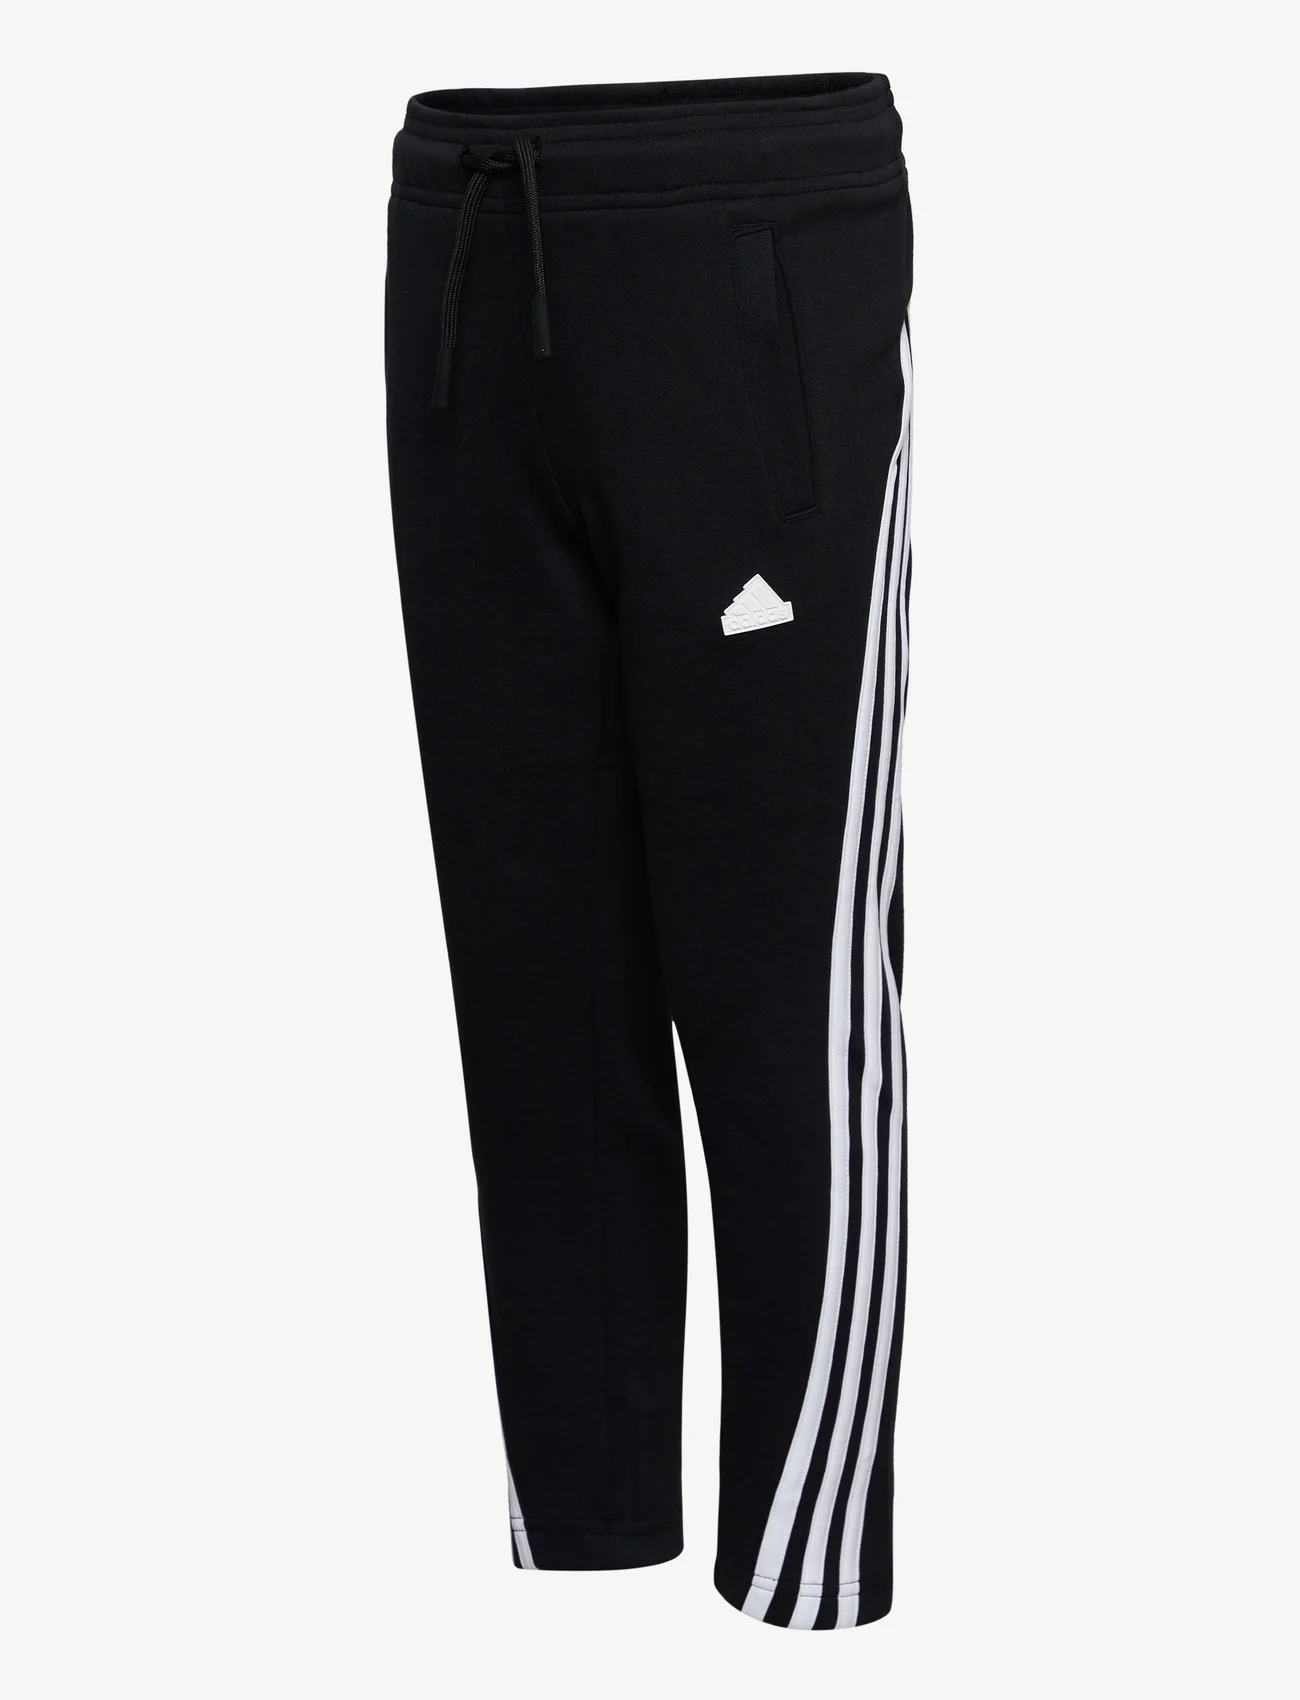 adidas Sportswear - U FI 3S PT - sweatpants - black/white - 1